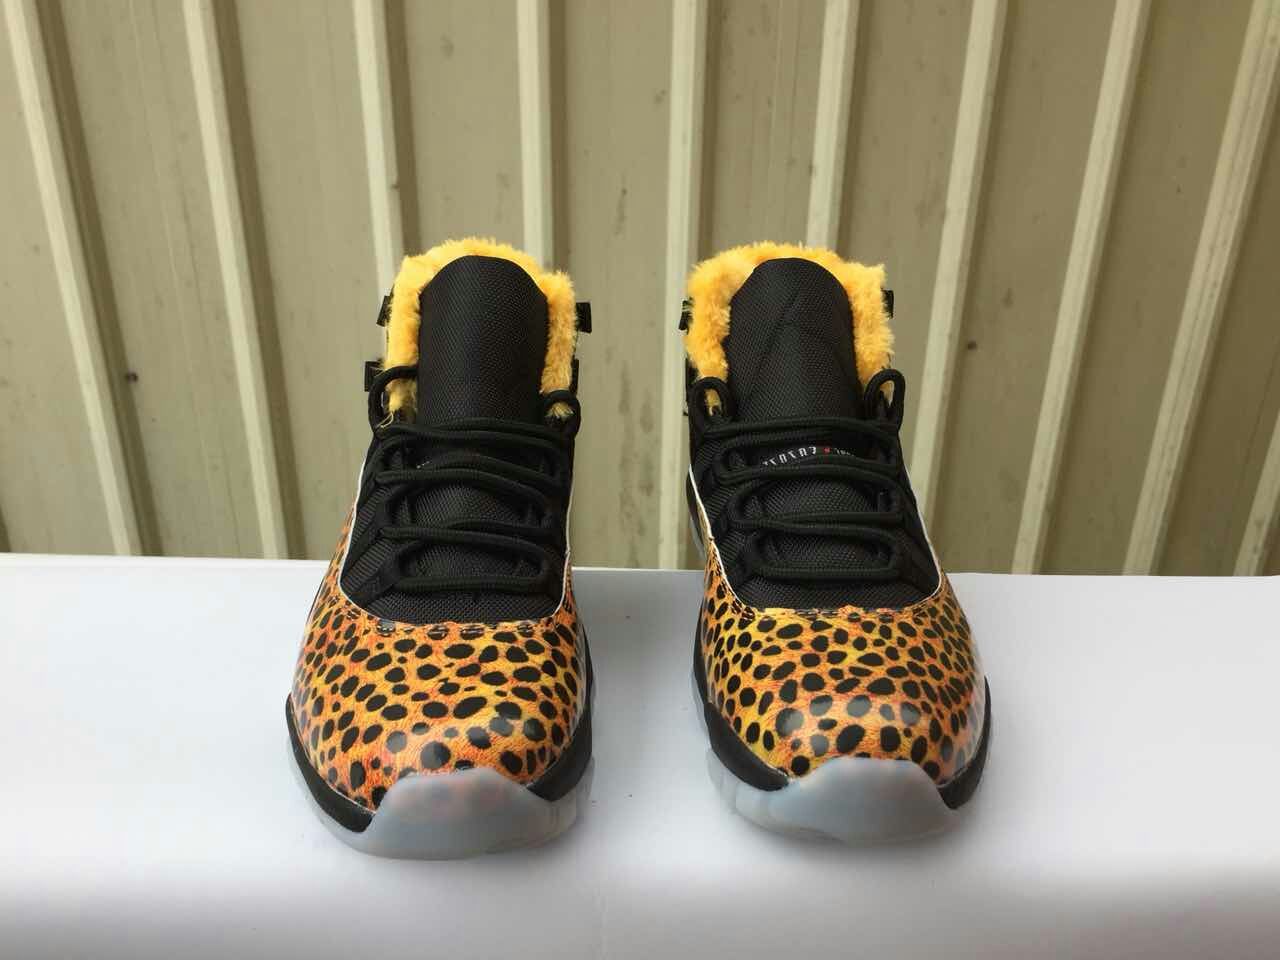 New Air Jordan 11 Leopard Print Yellow Black Shoes